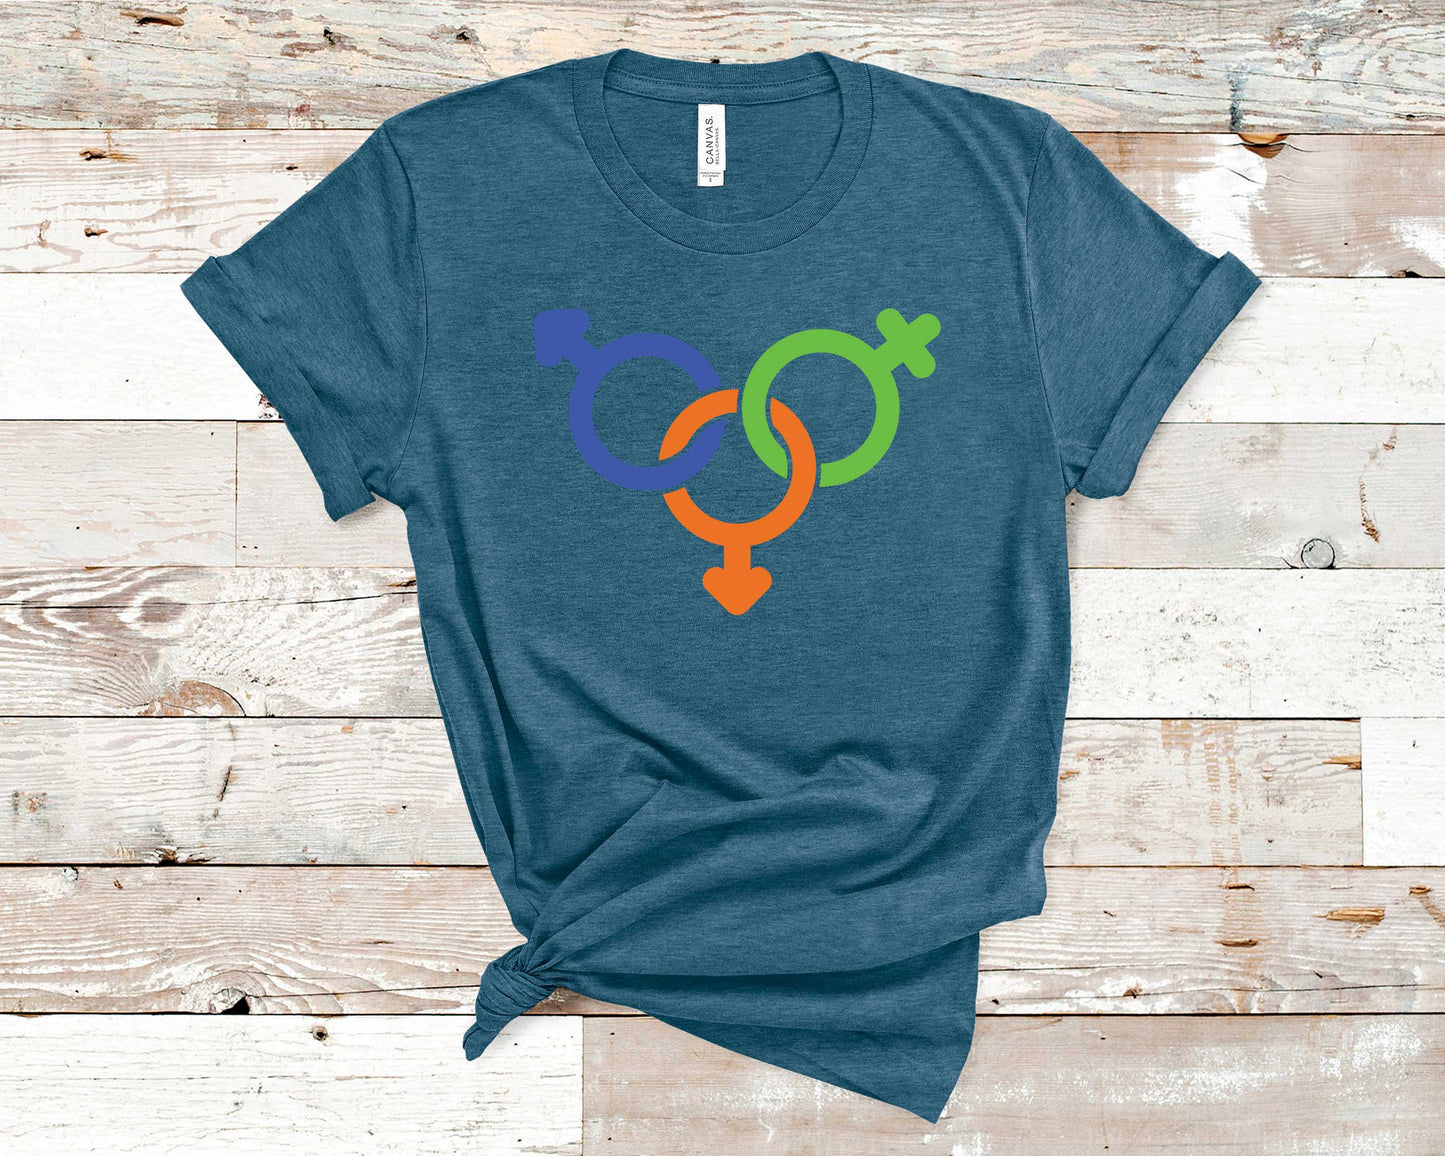 Gender Symbols - LGBTQ